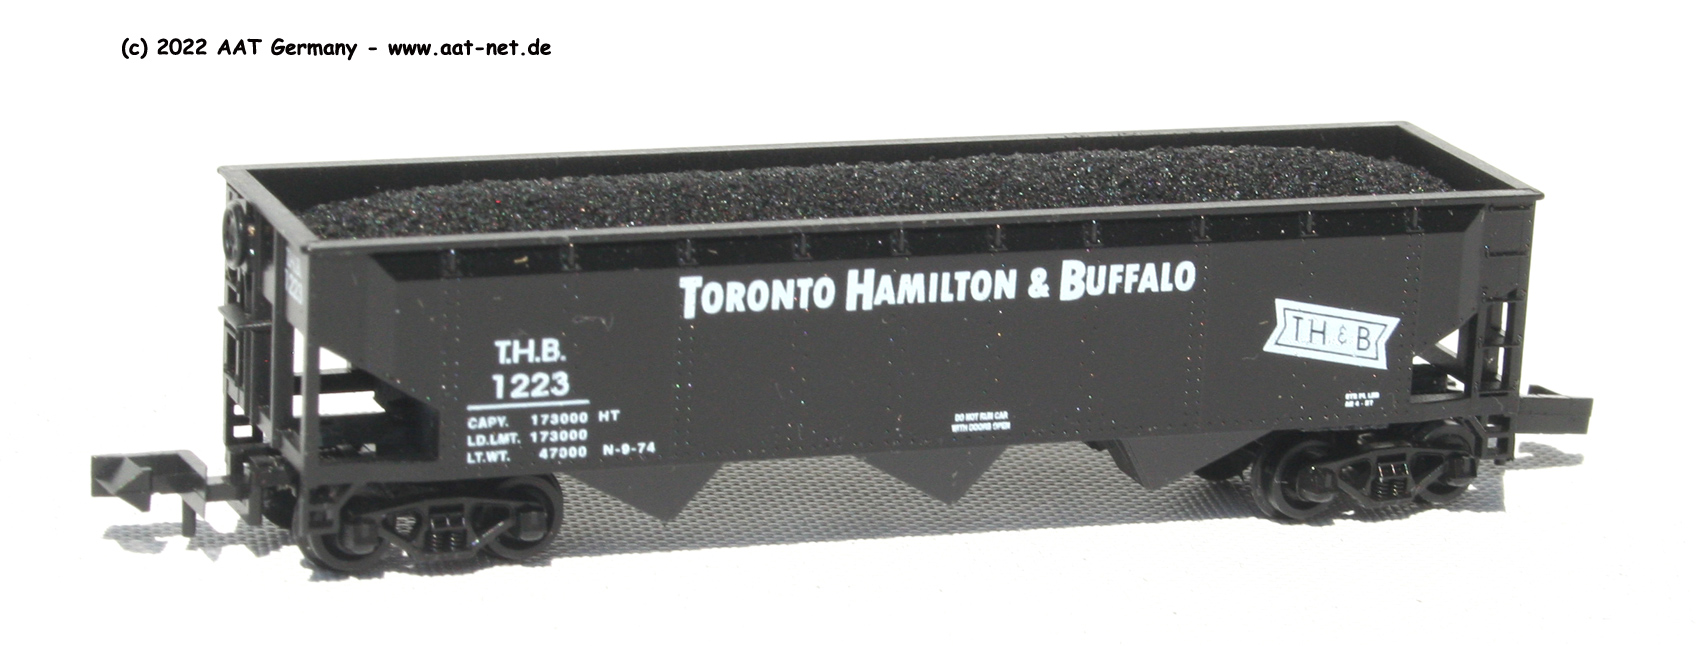 Toronto Hamilton & Buffalo